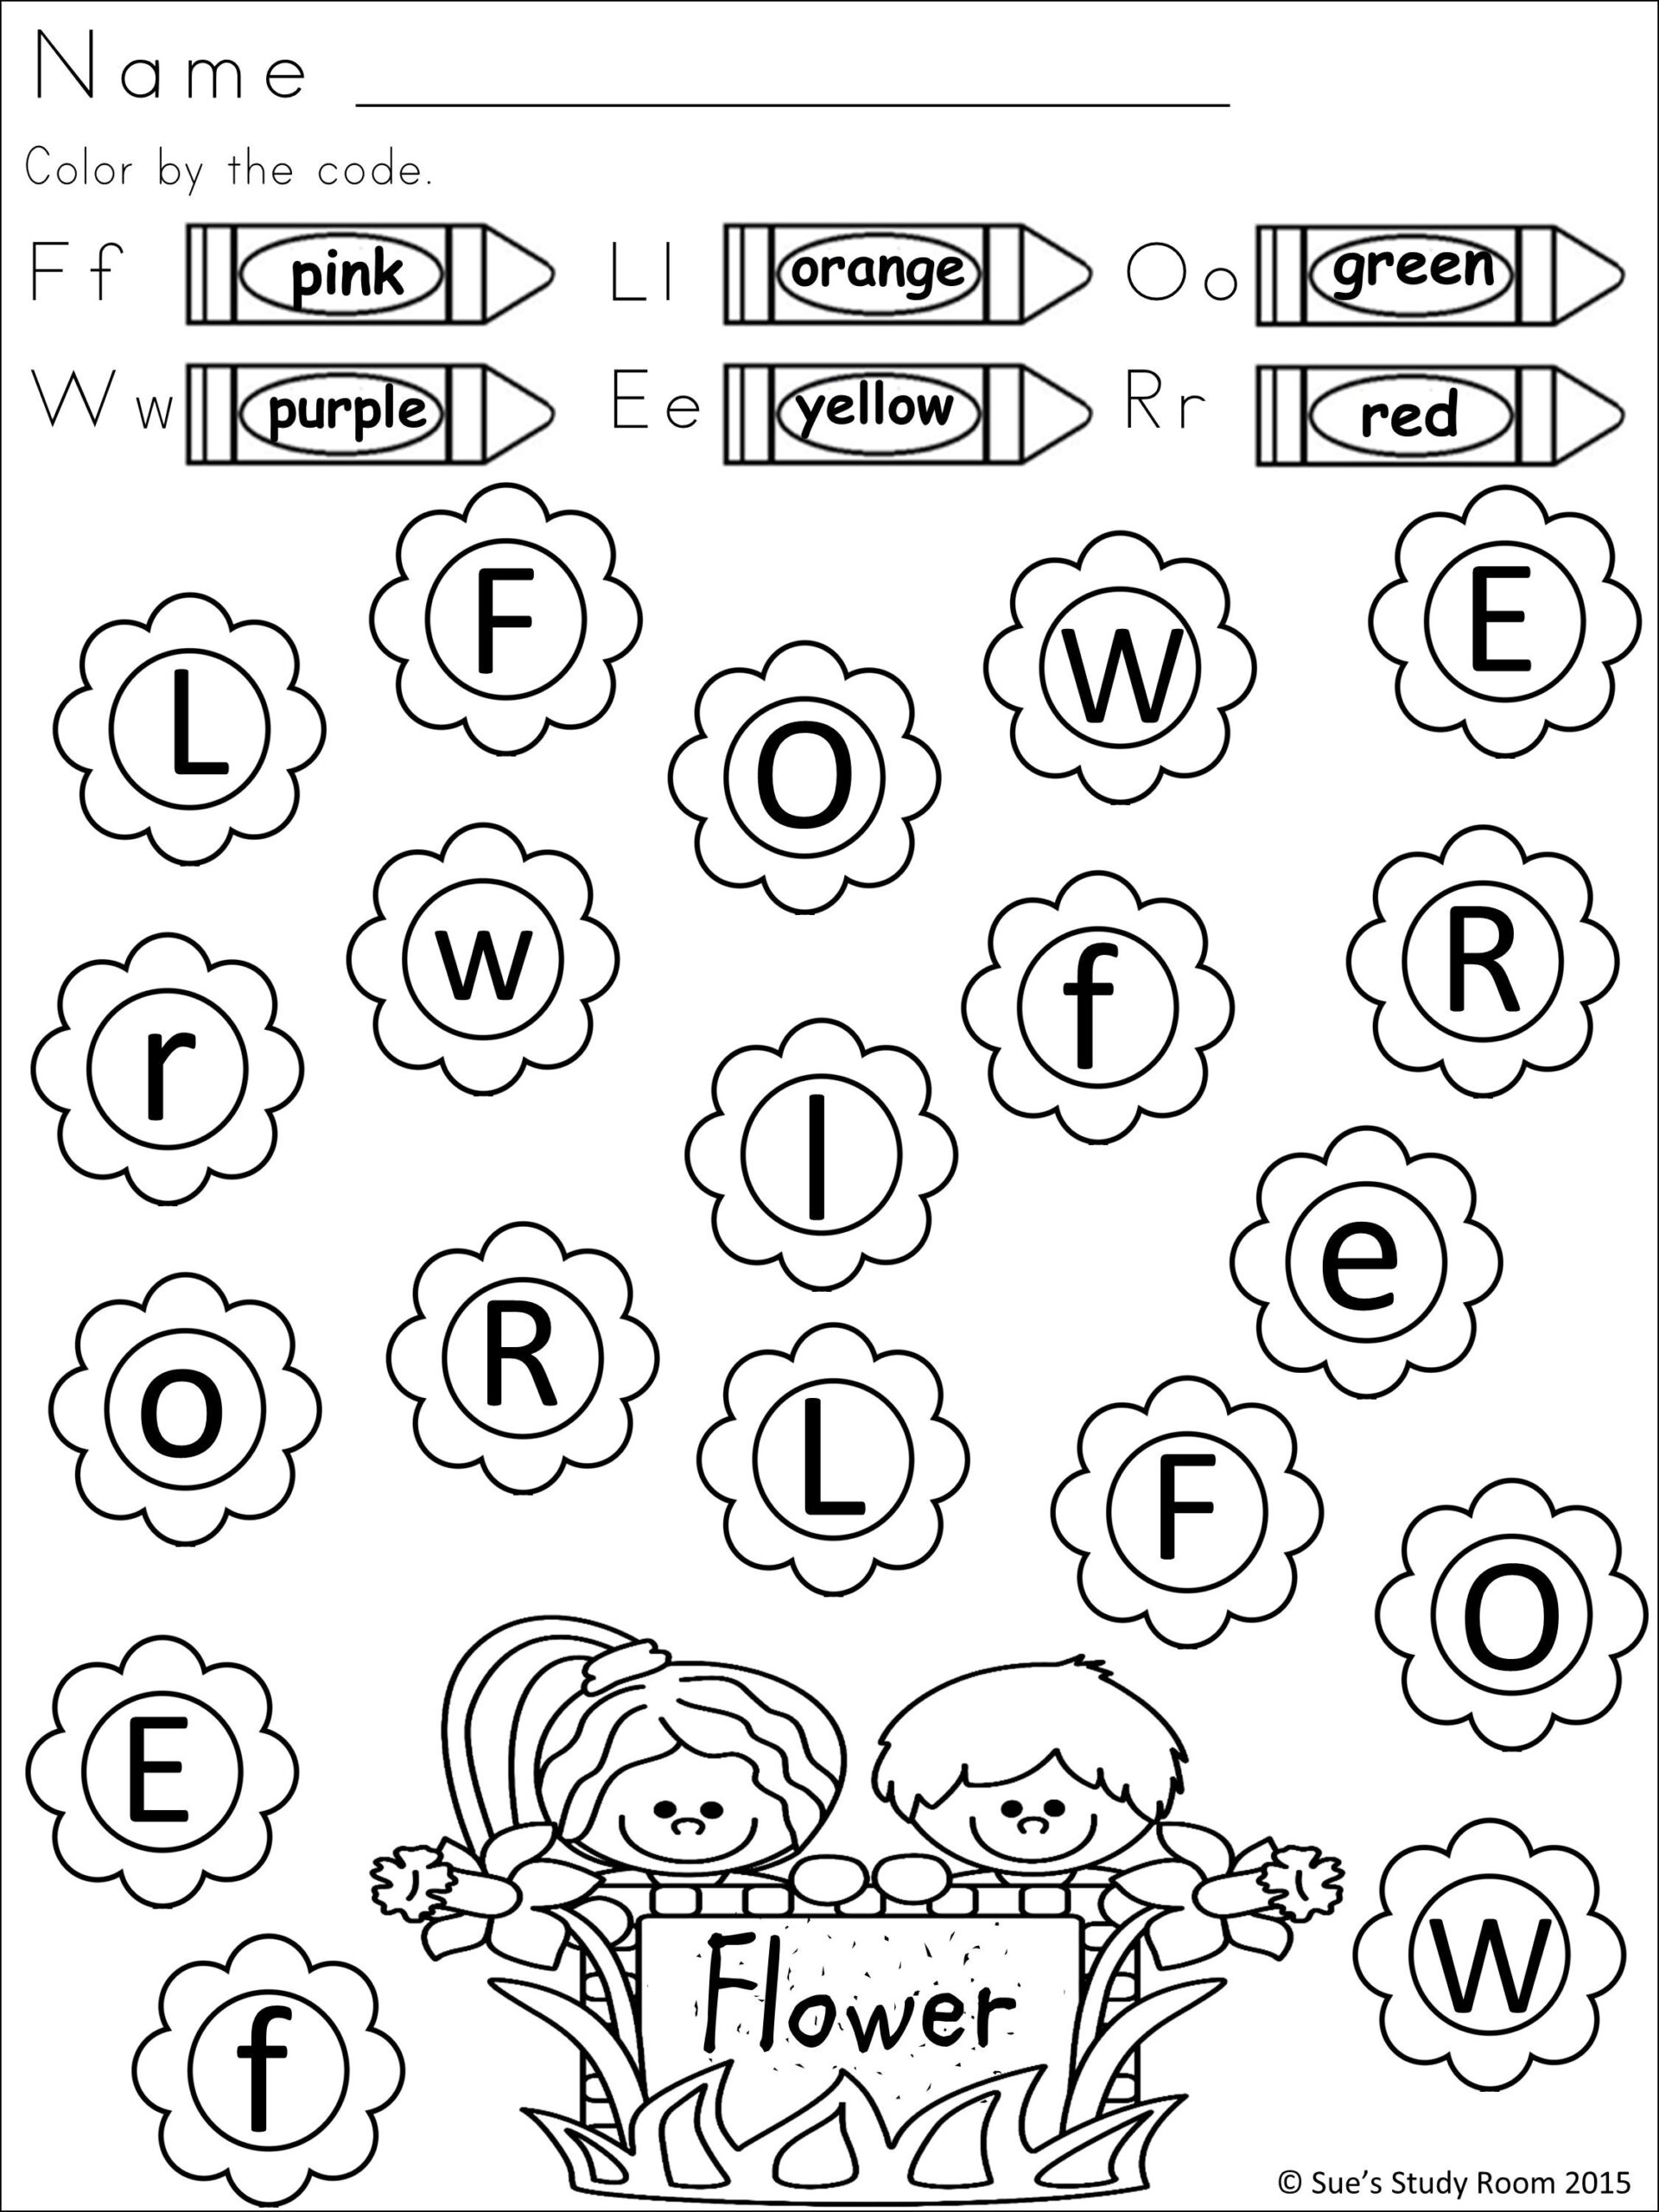 alphabet-letter-recognition-sheet